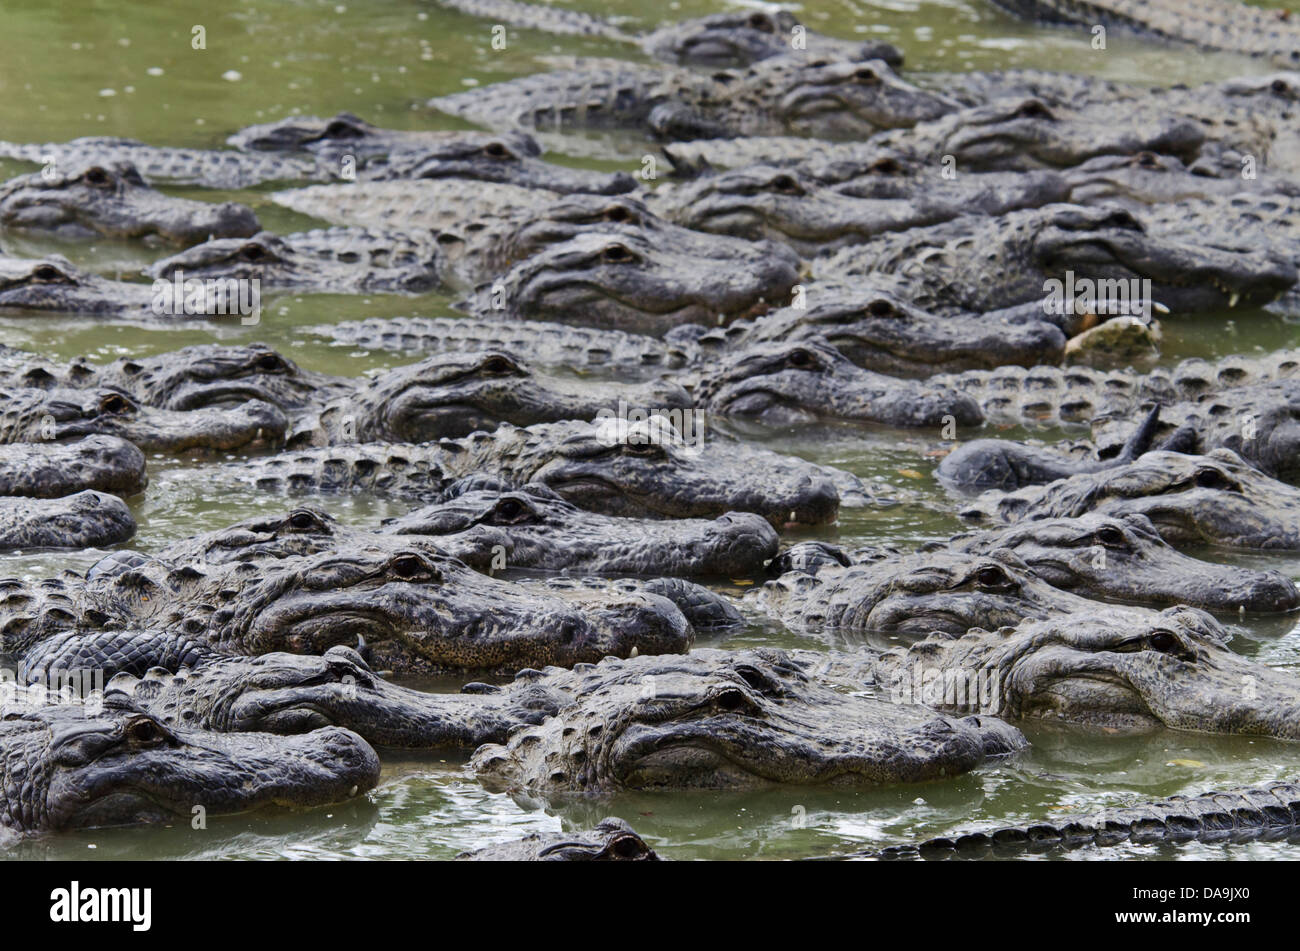 american alligator, alligator mississippiensis, Florida, USA, everglades, alligator, animal, crocodile, group Stock Photo